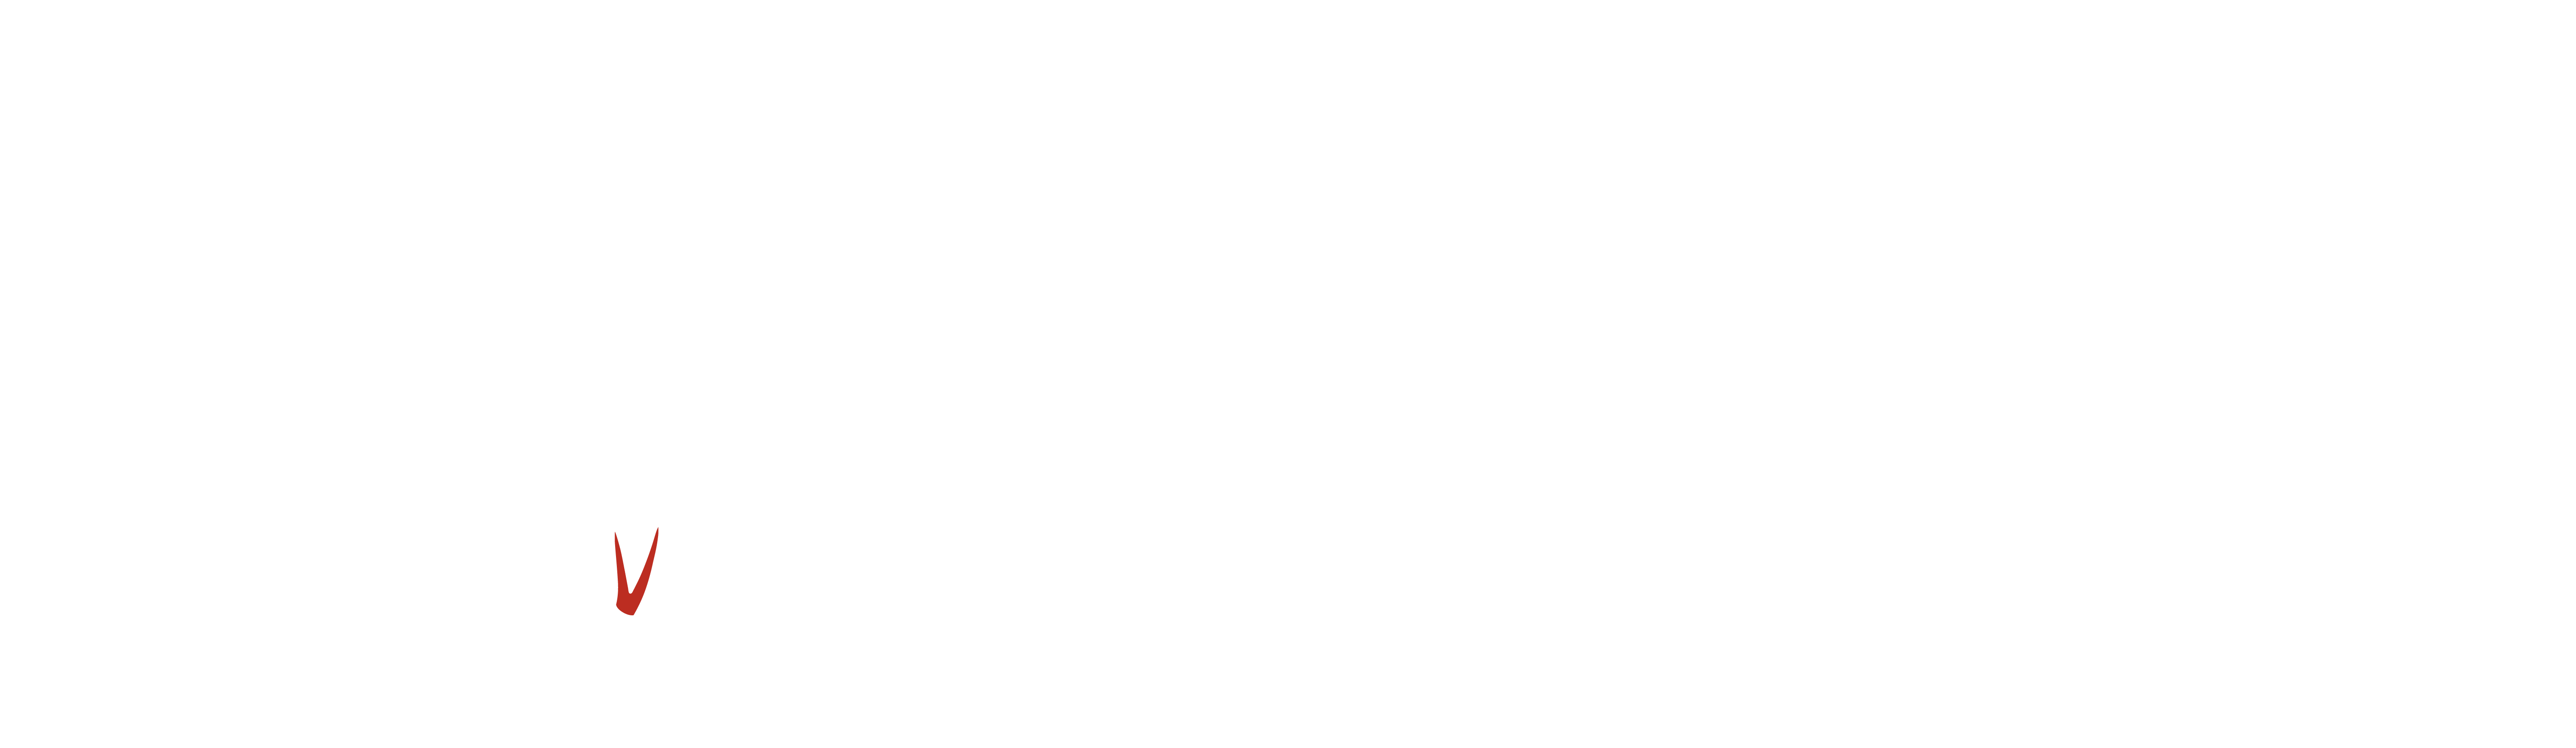 Vipre Electronics